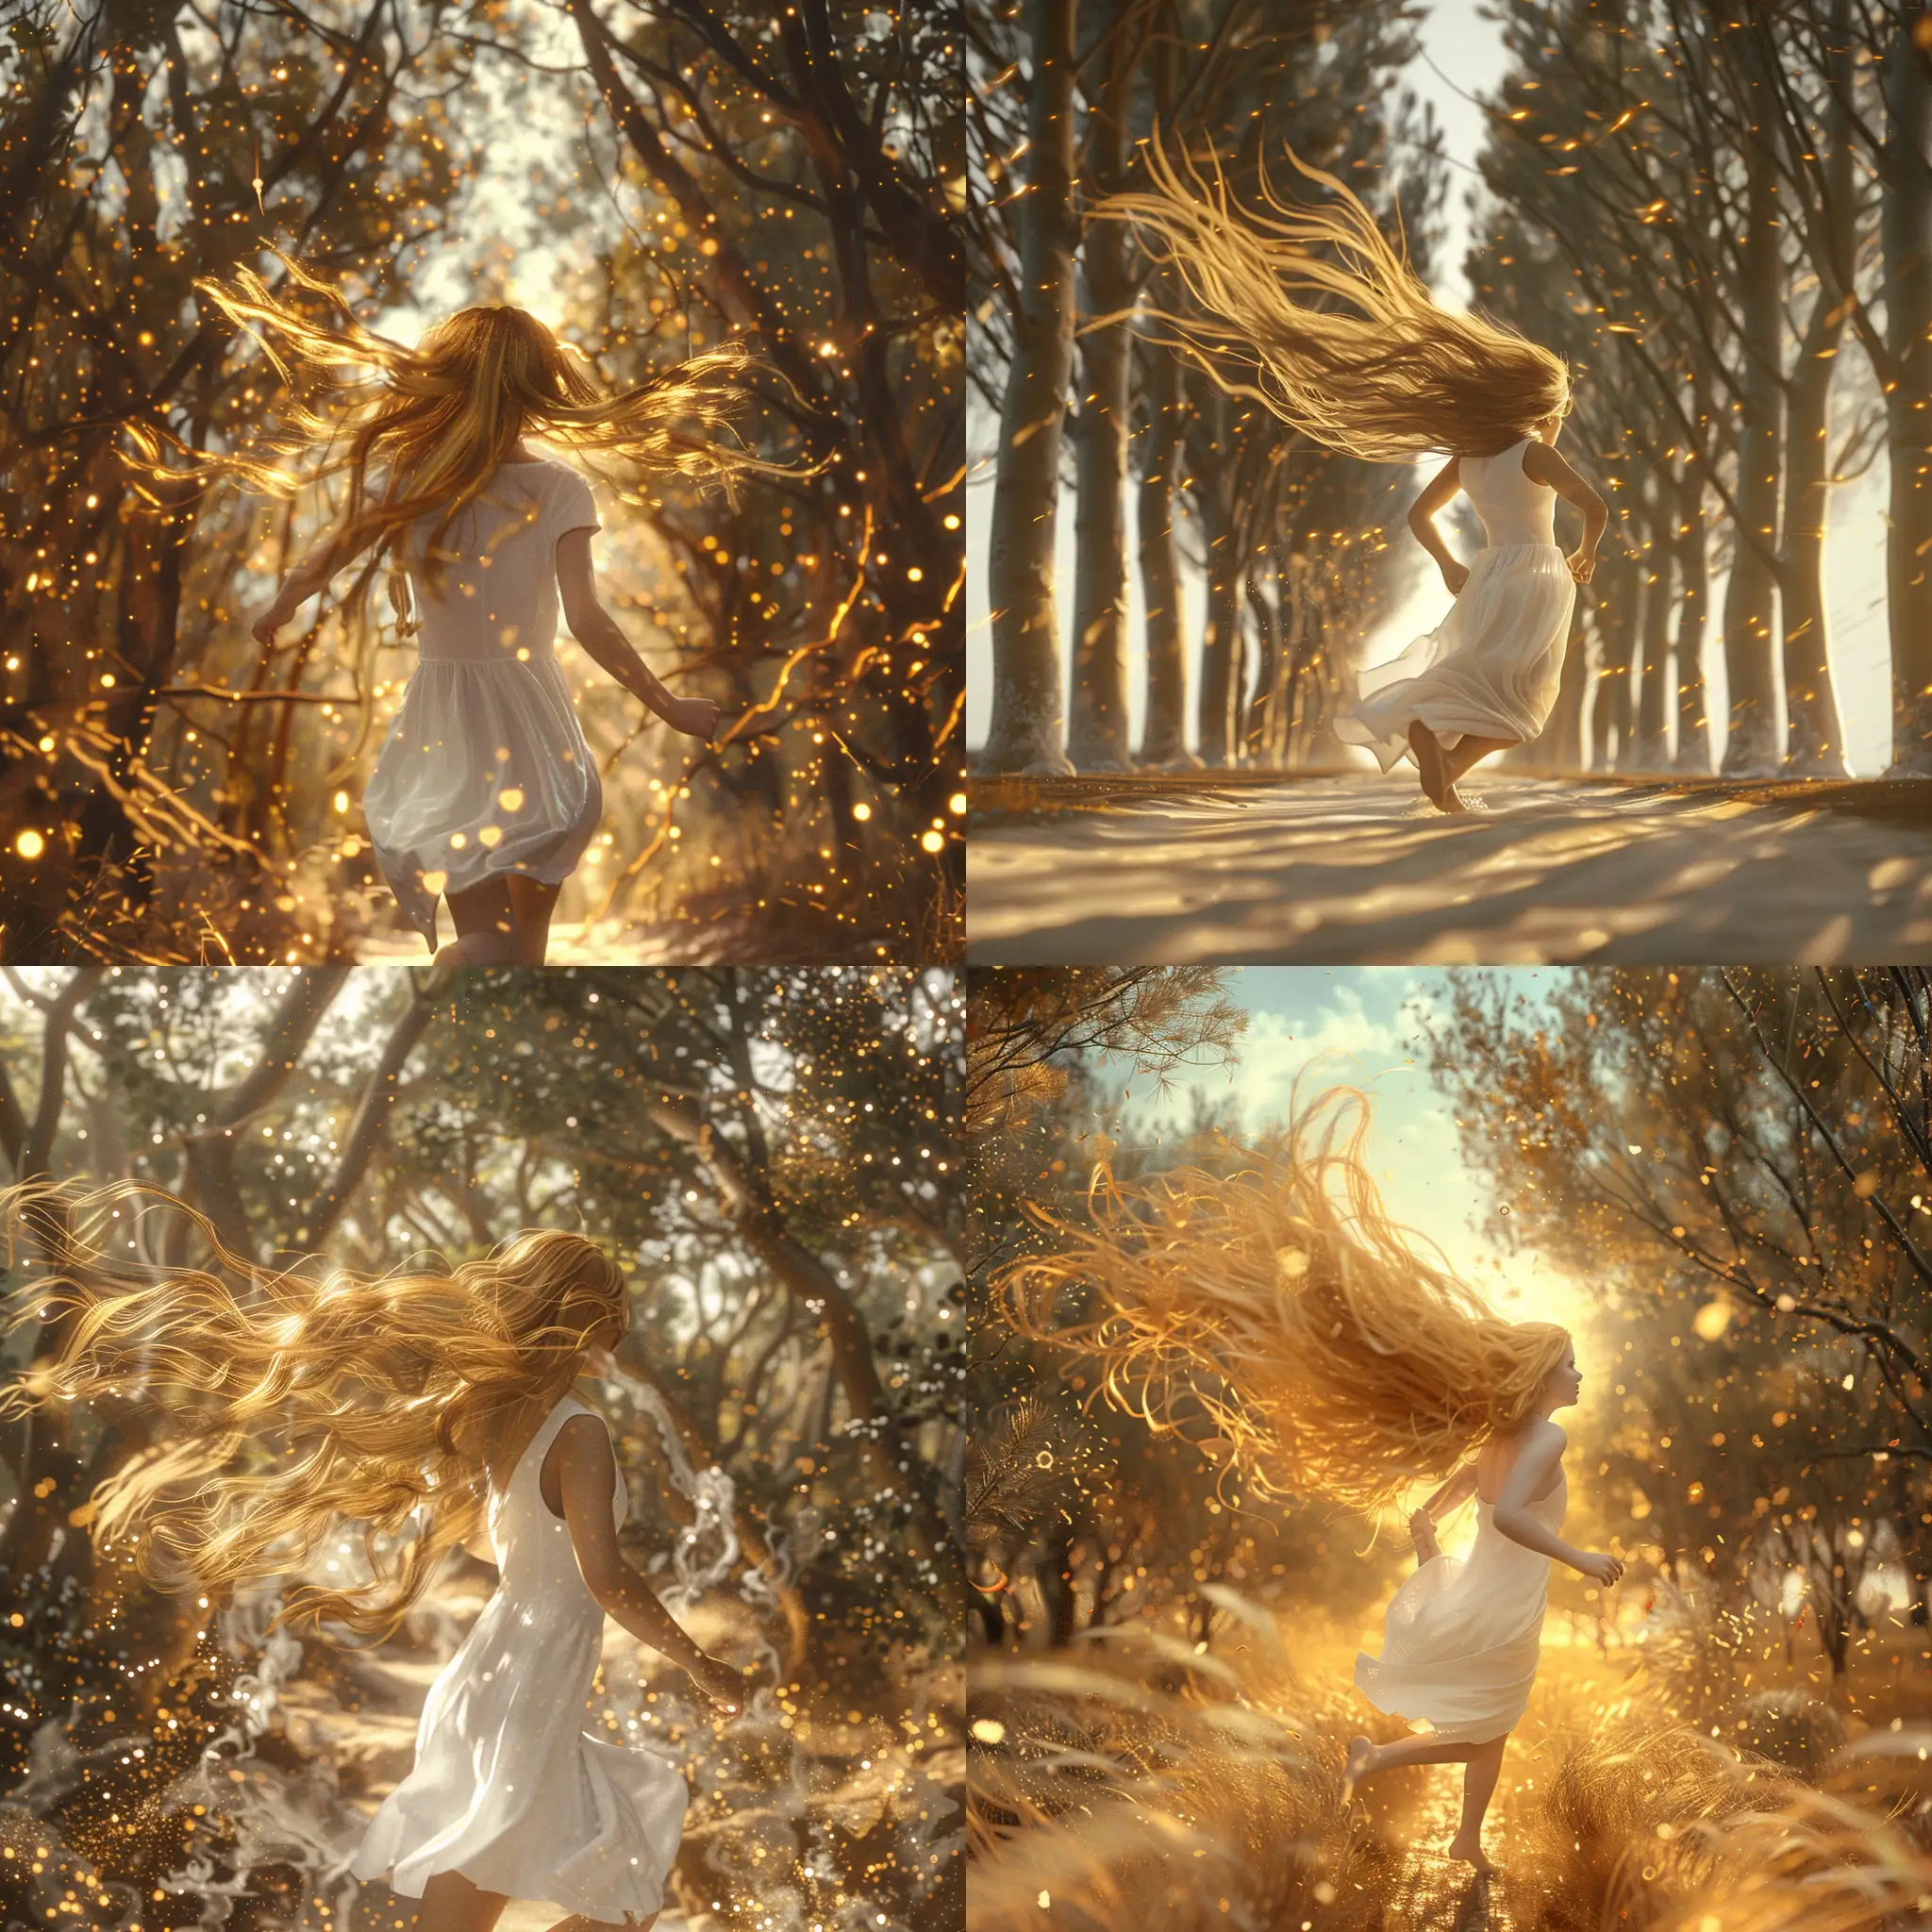 GoldenHaired-Girl-Running-in-Enchanted-Forest-Landscape